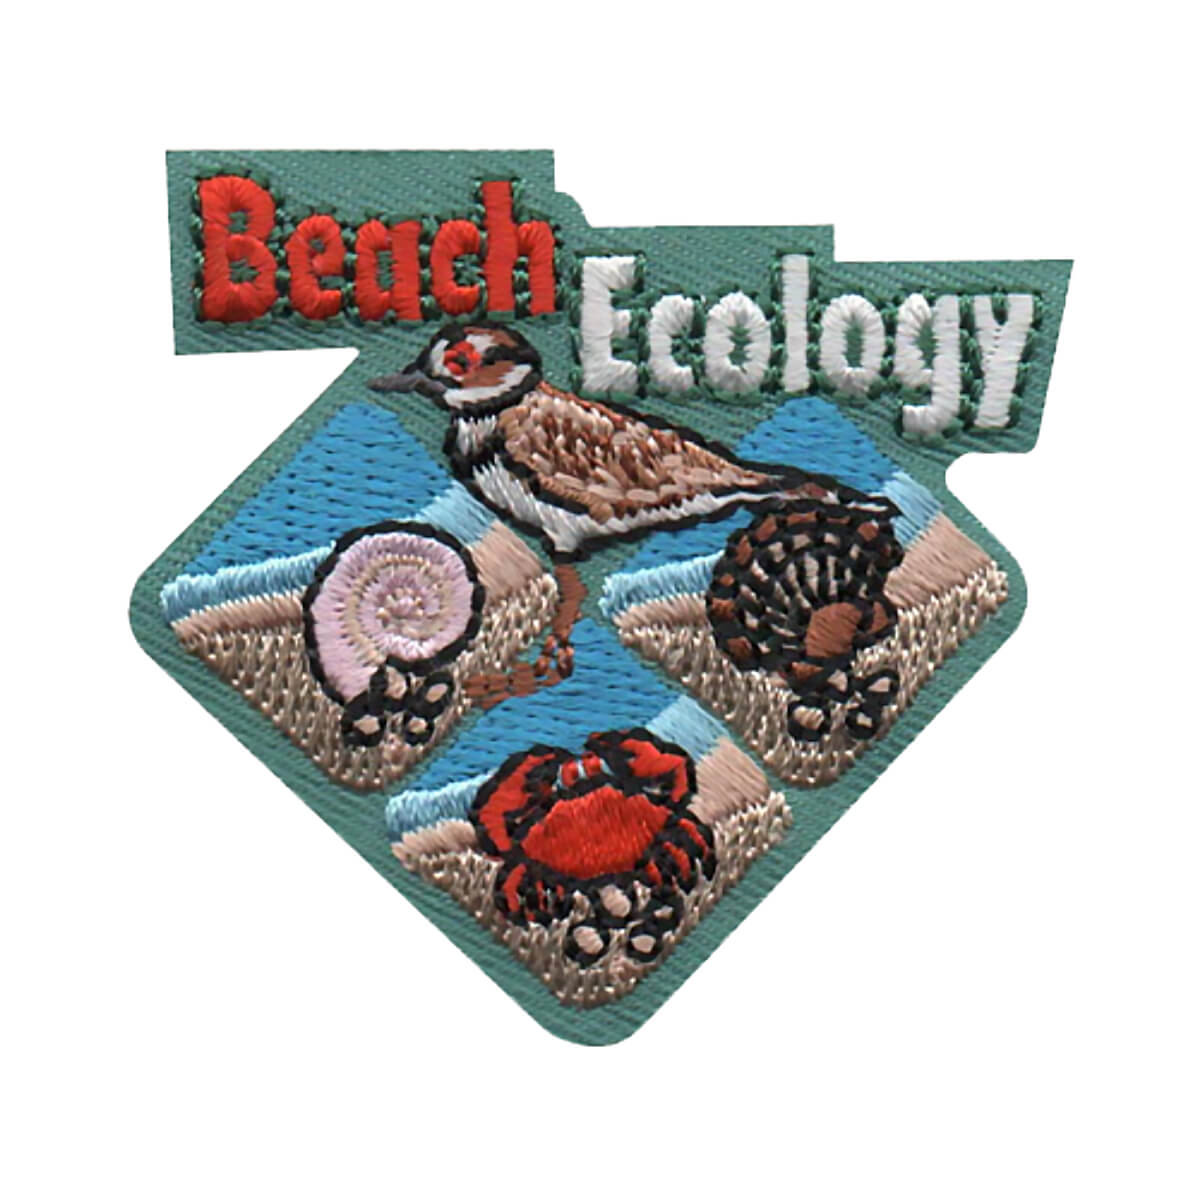 Beach Ecology - W